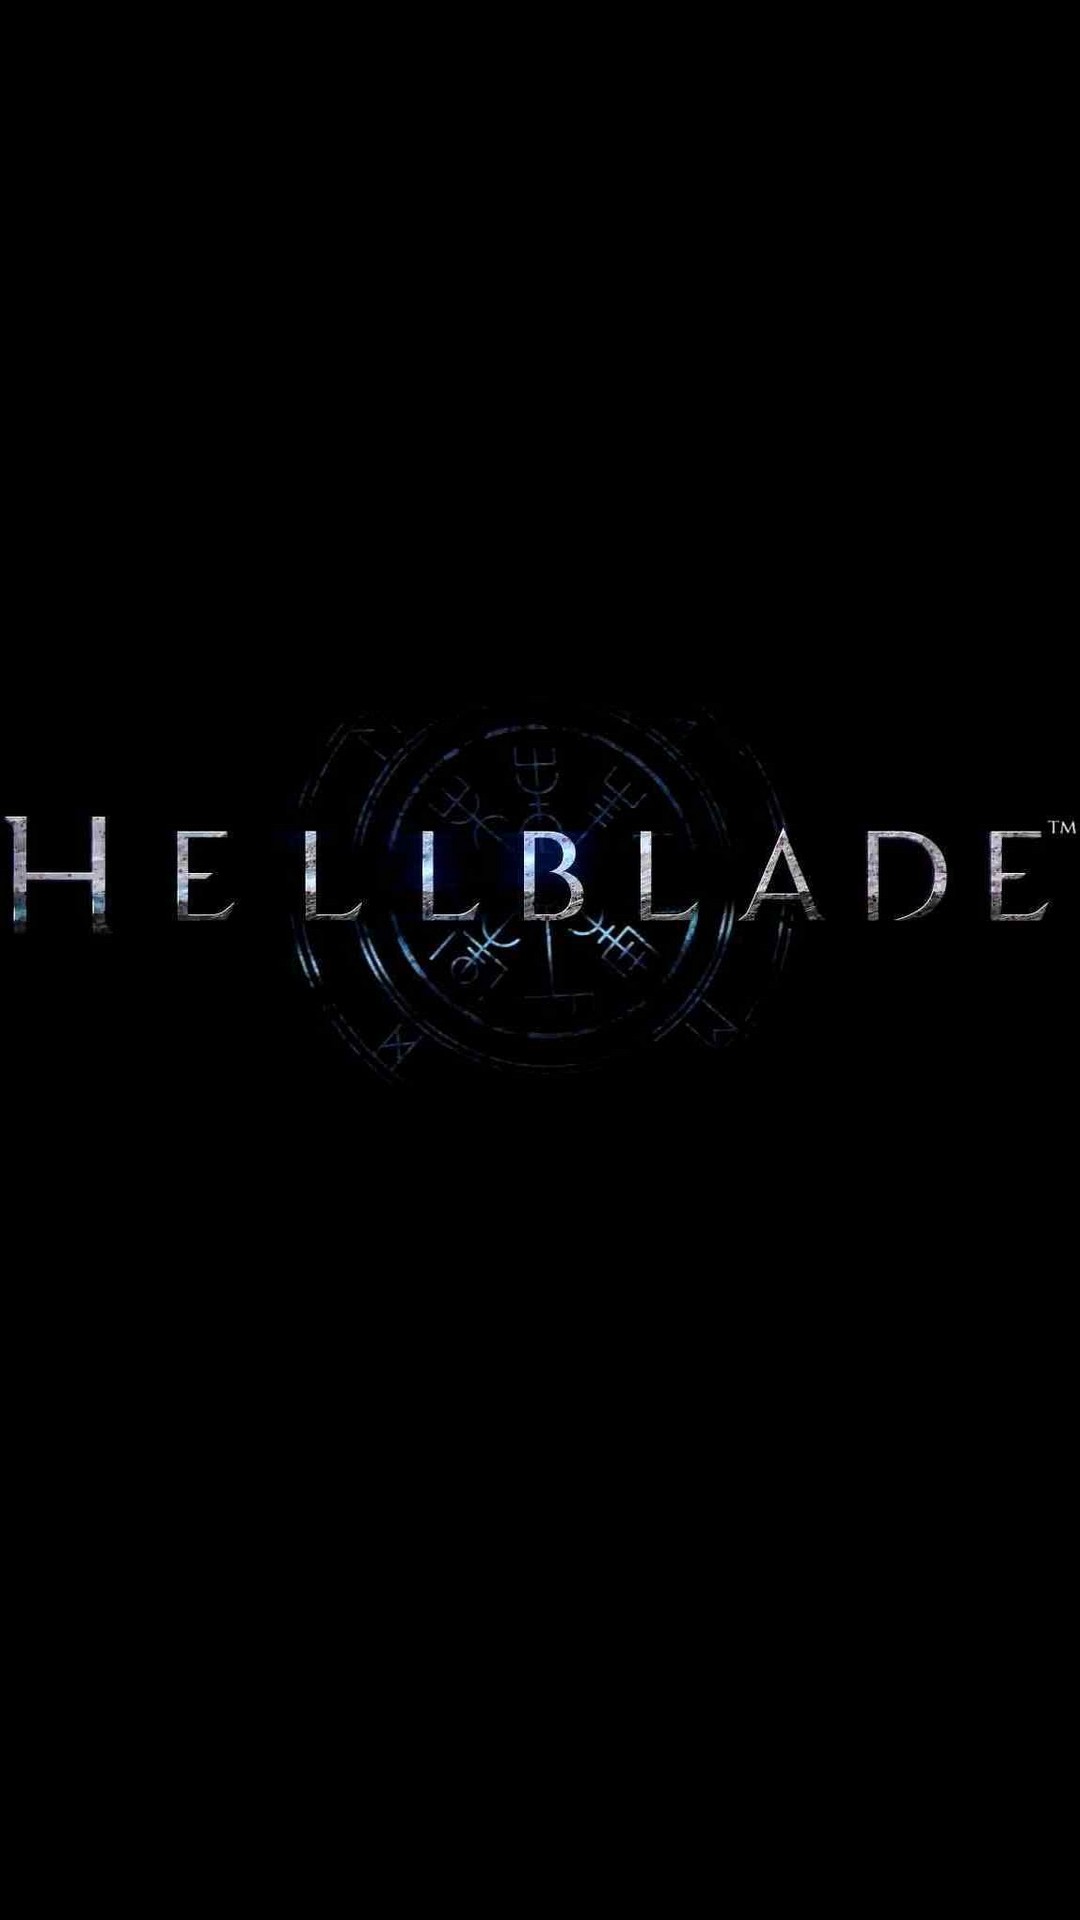 Hellblade Senua’s Sacrifice Logo iPhone Wallpaper resolution 1080x1920